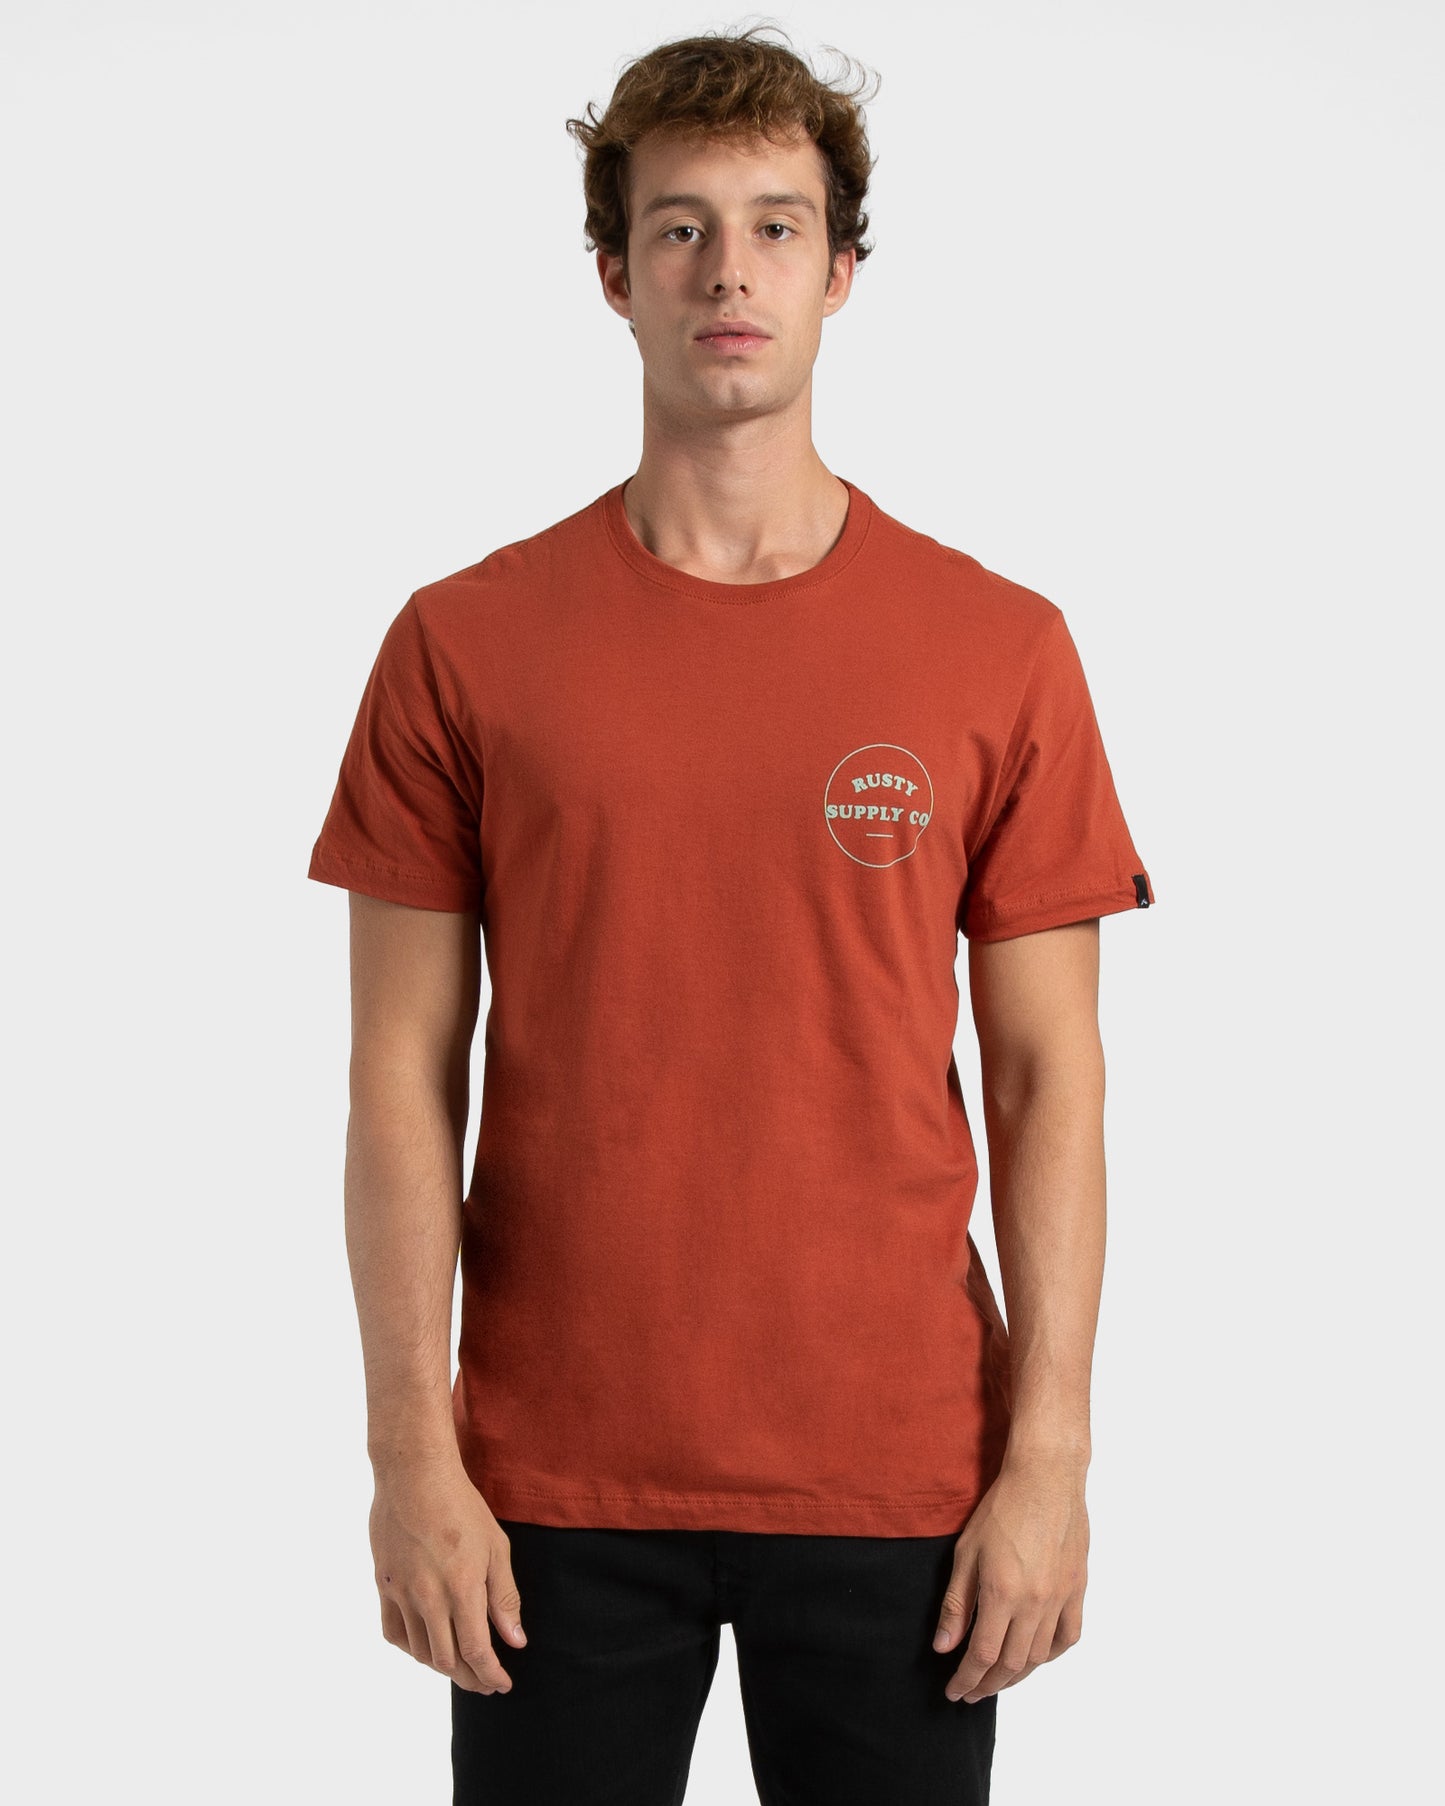 Camiseta Rusty Supply Vermelho